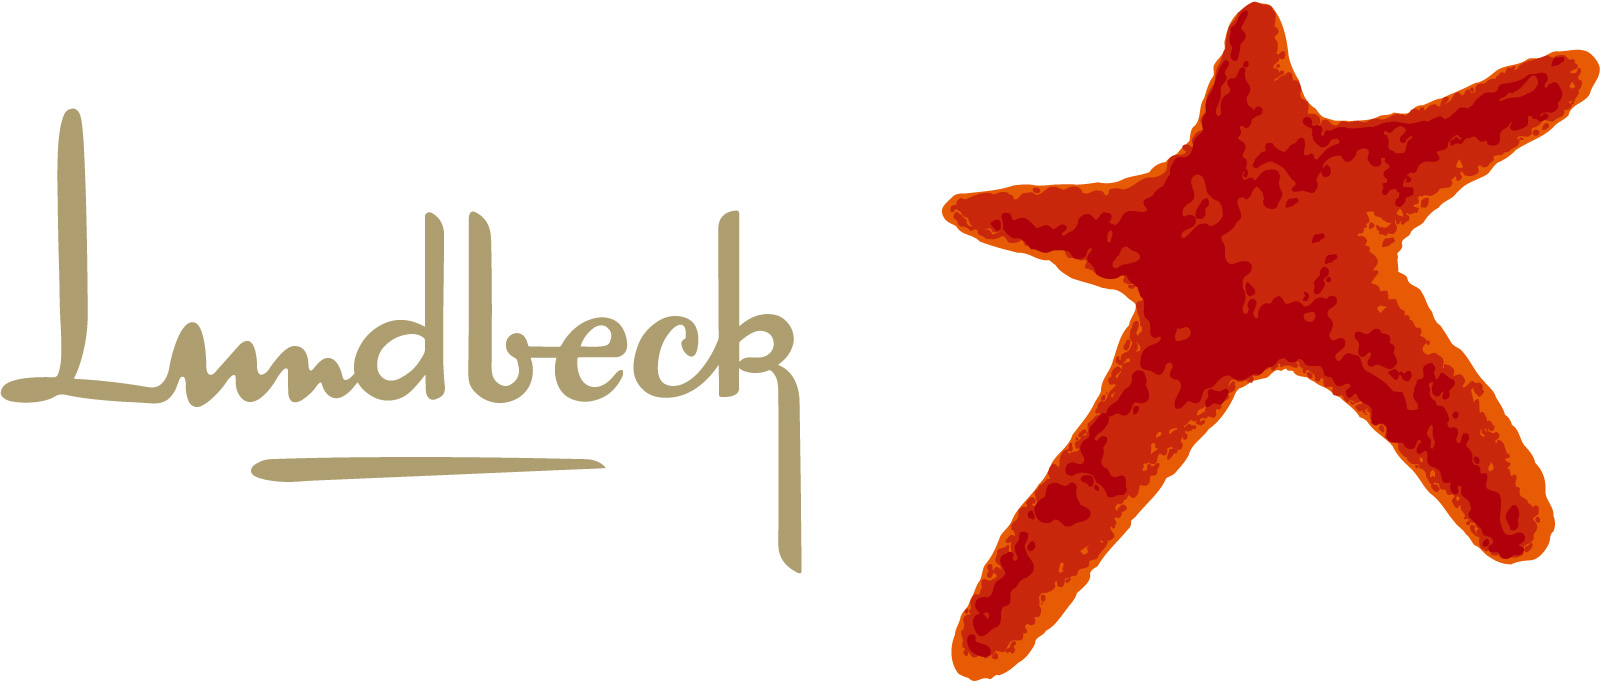 H Lundbeck Brand Logo